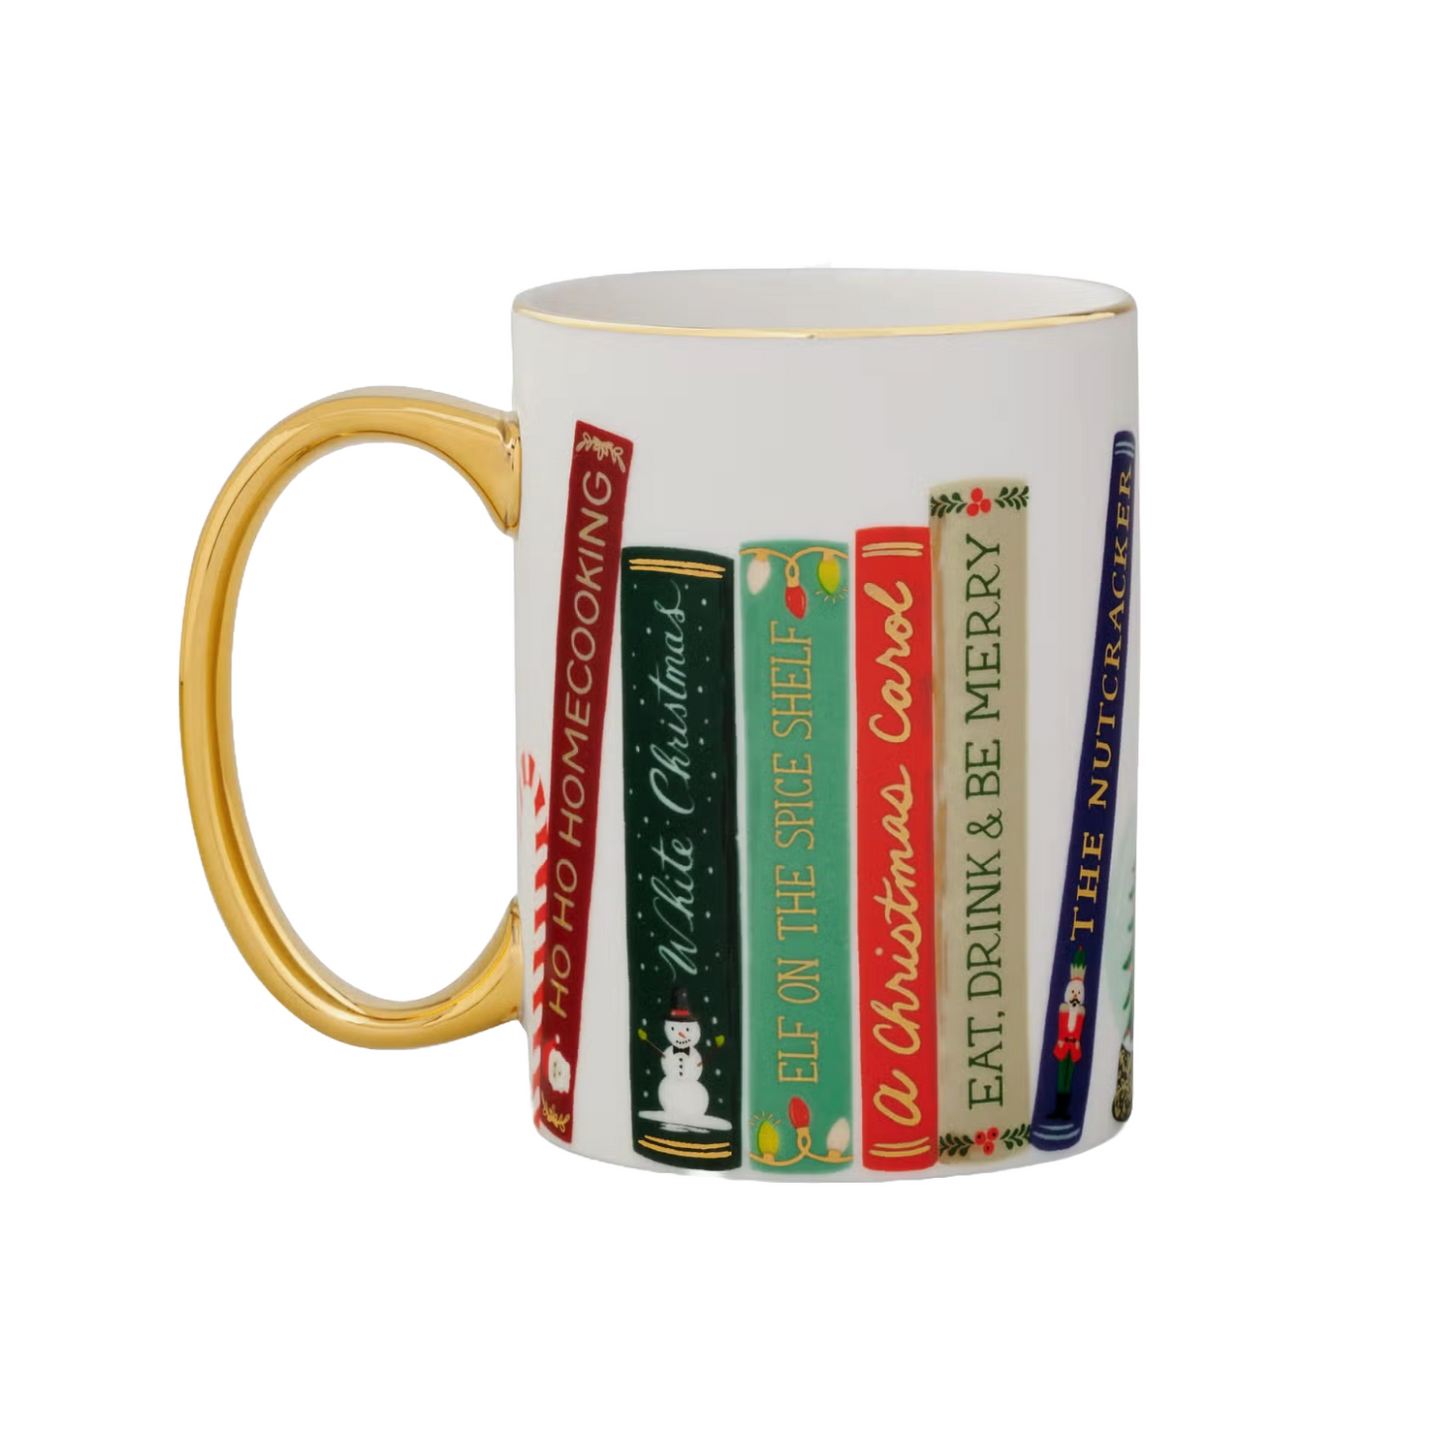 Festive Book Club Mug by Rifle Paper Co.